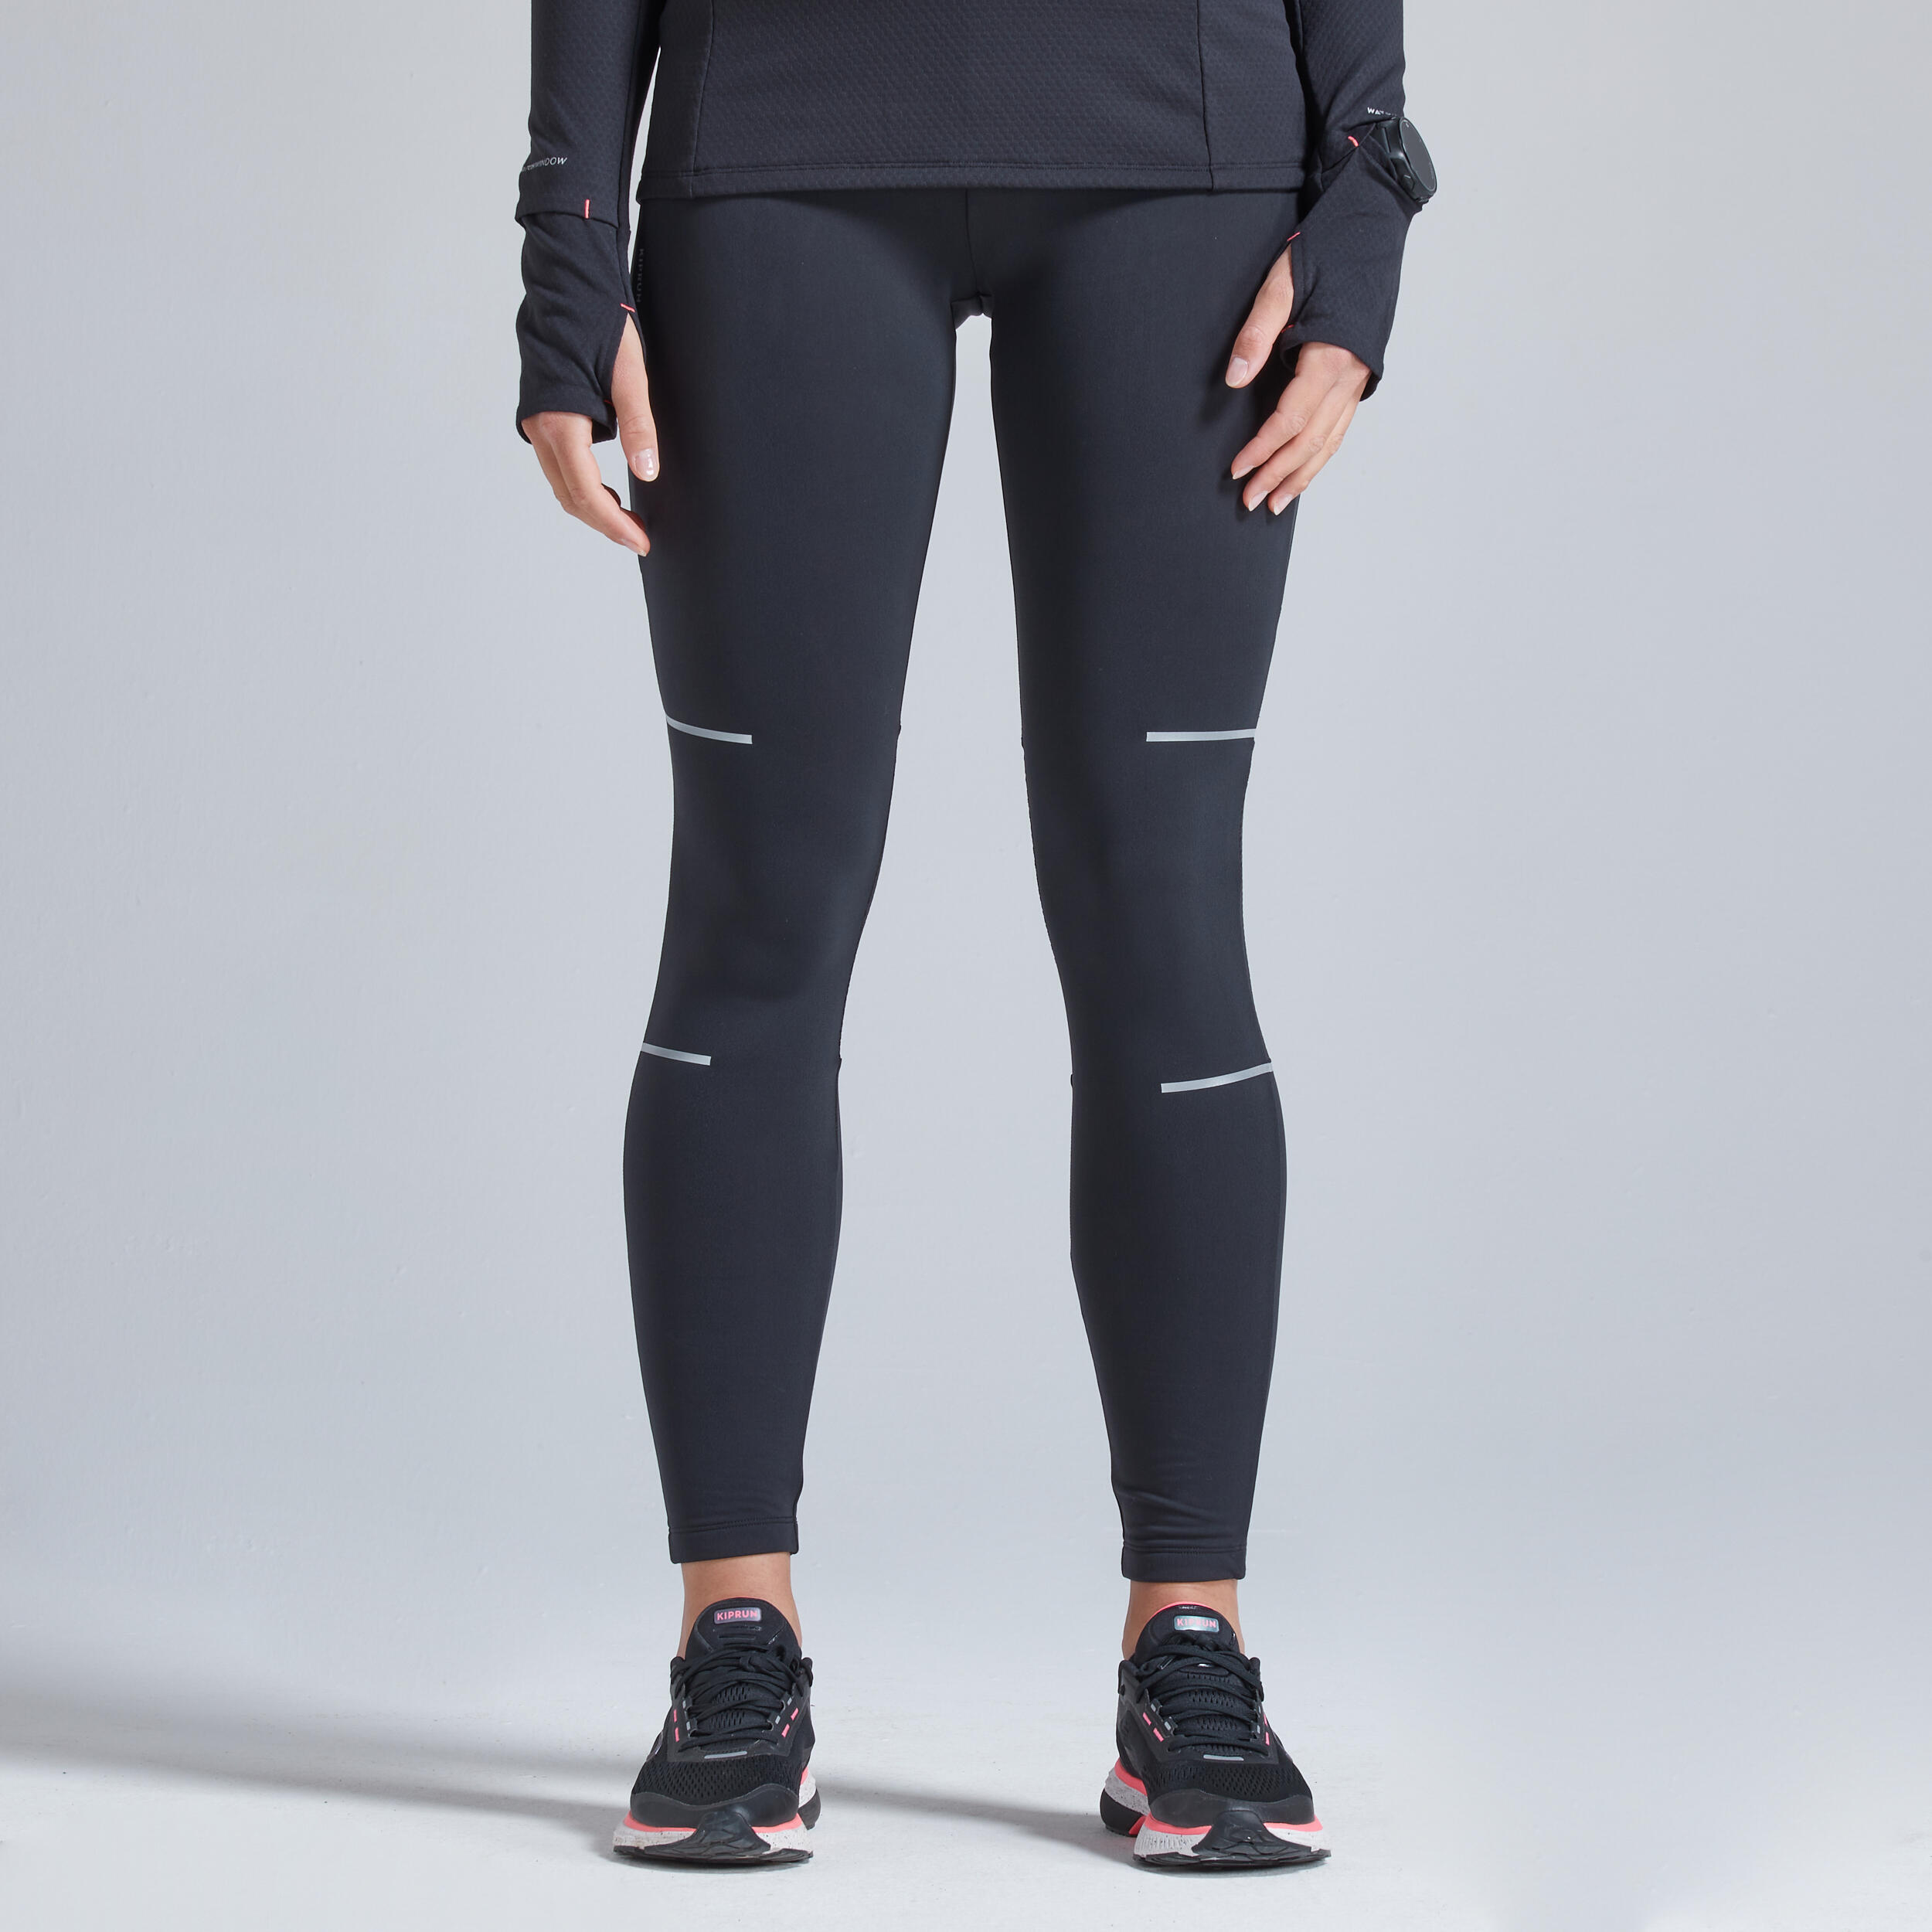 BLACK RUNNING LEGGINGS trousers decathlon kalenji sports age 10 years £3.00  - PicClick UK